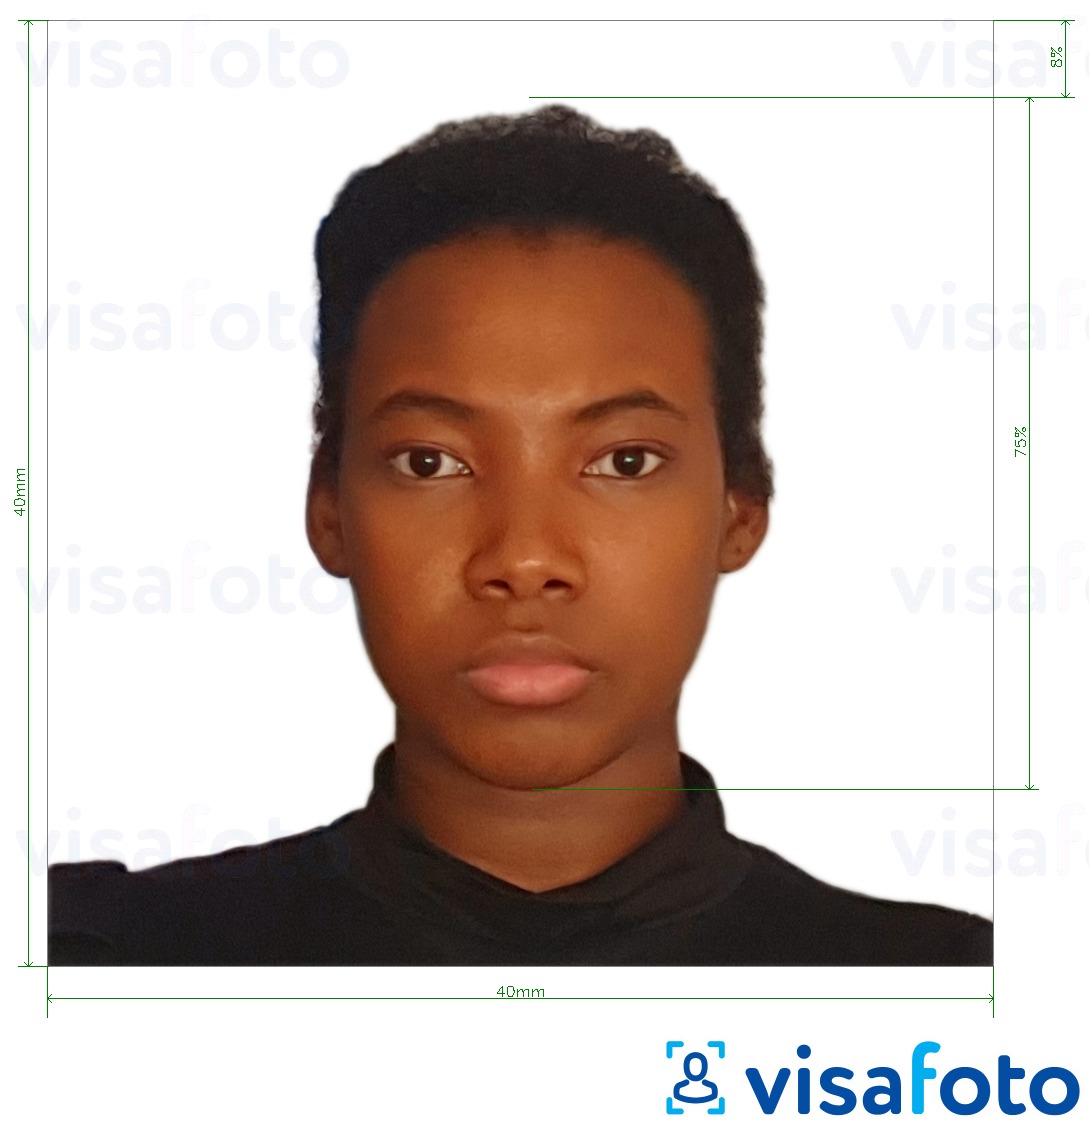 Contoh foto untuk Pasport Cameroon 4x4 cm (40x40 mm) dengan spesifikasi saiz yang tepat.